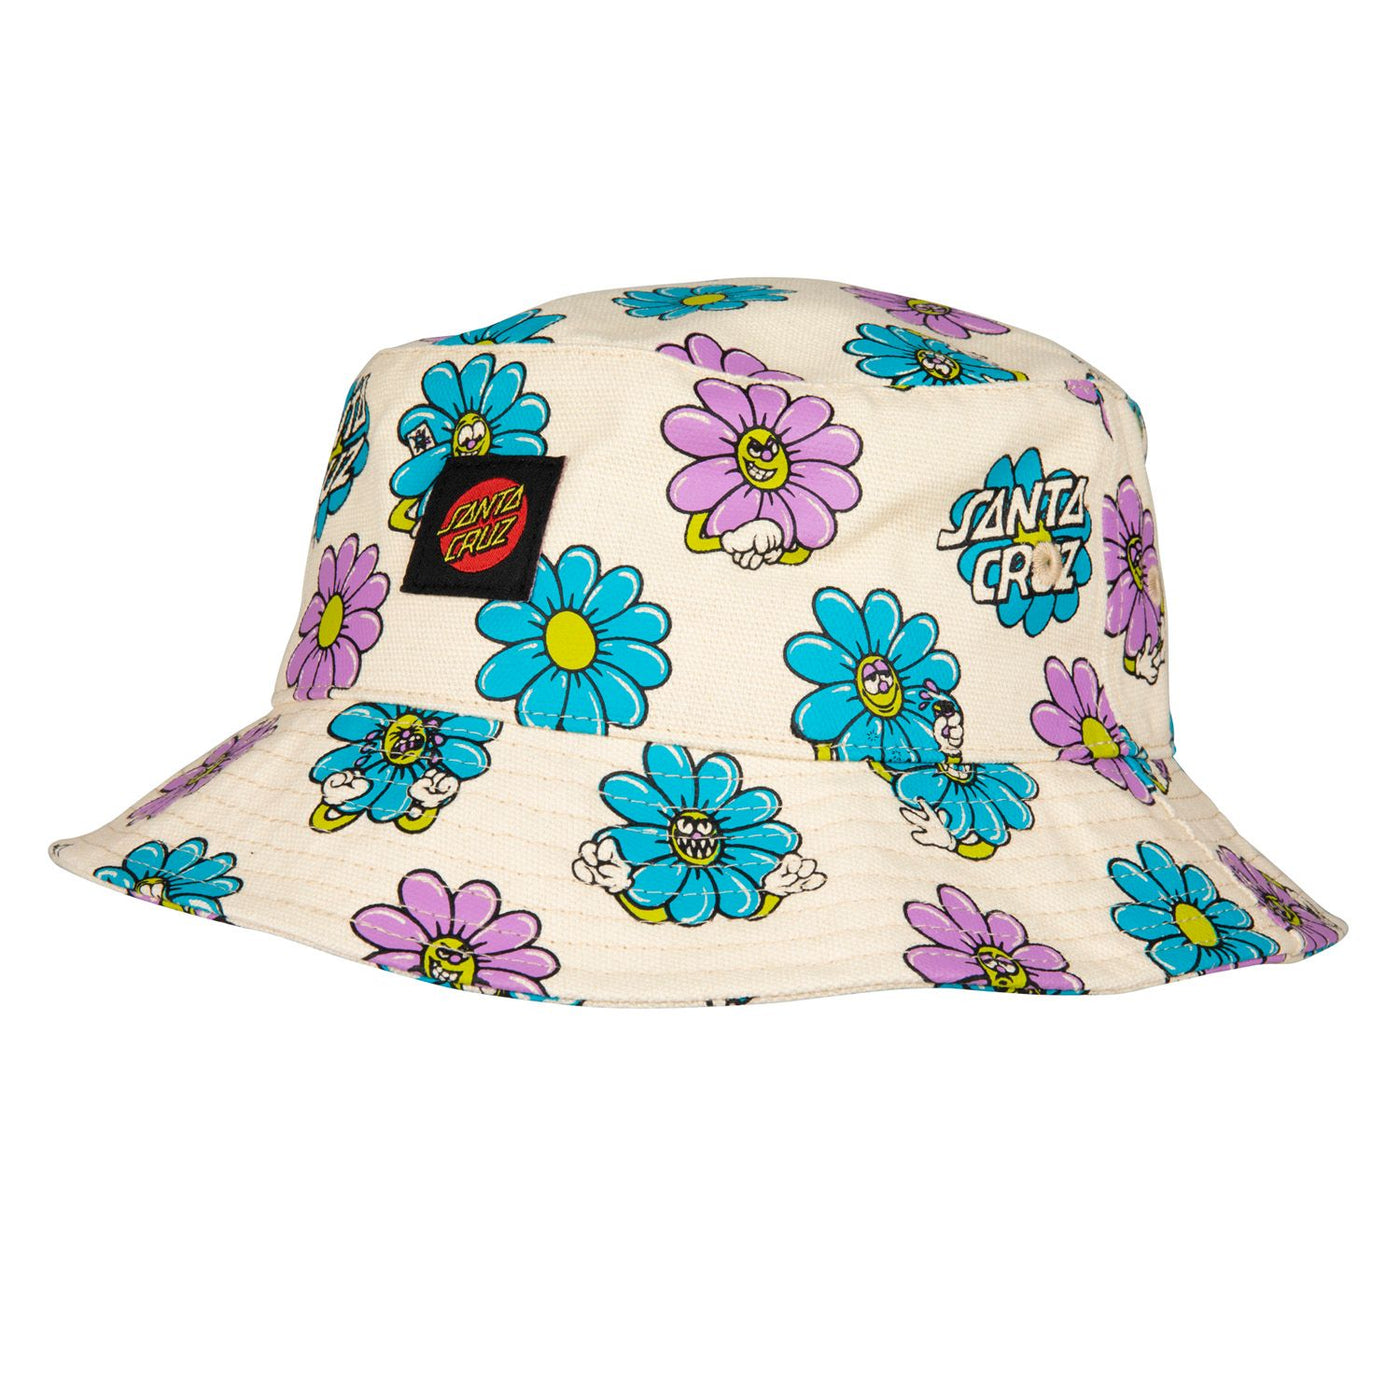 Santa Cruz Wildflower Bucket Hat - Multi